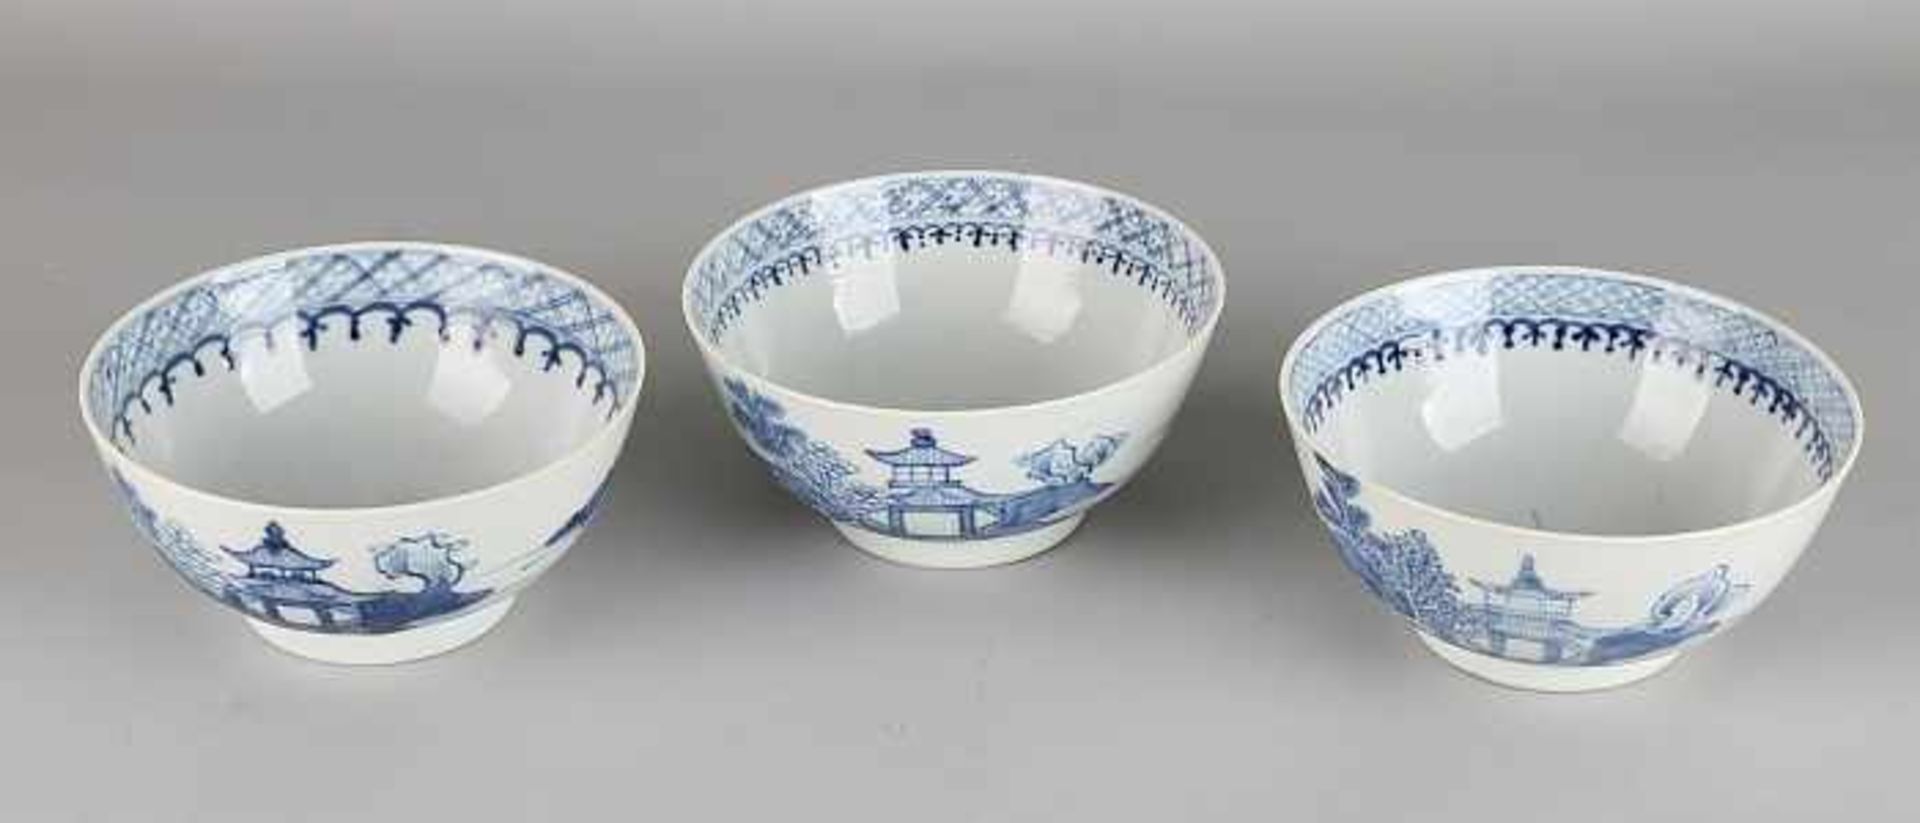 Three antique Chinese porcelain bowls with coastal resort decor and pagodas. Circa 1800. All